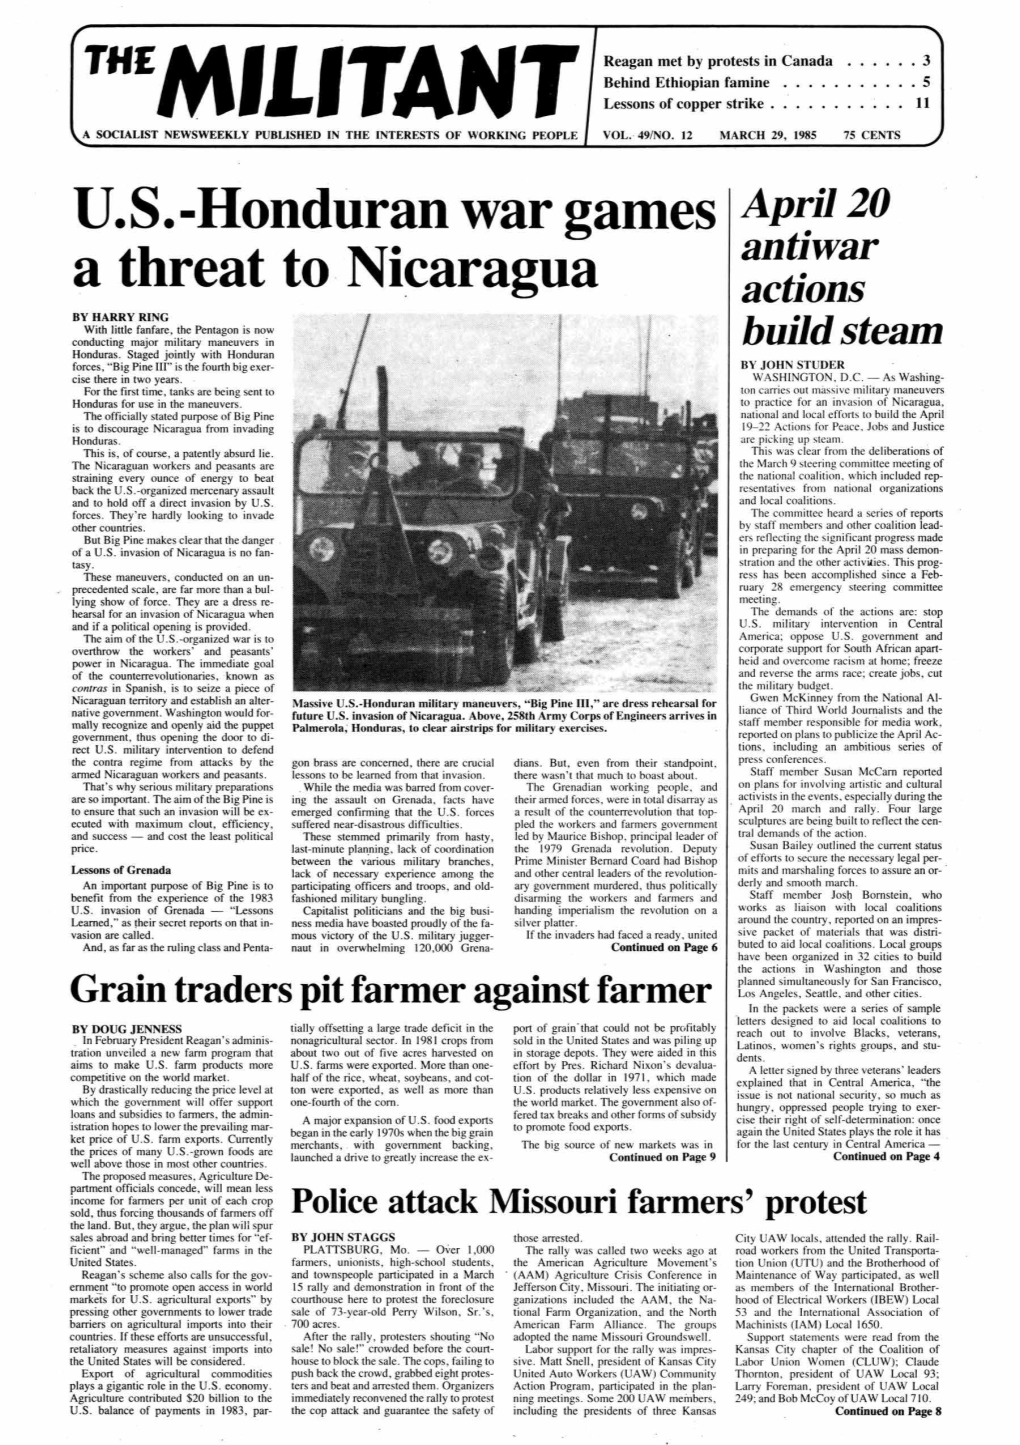 U.S.-Honduran War Games a Threat To. Nicaragua